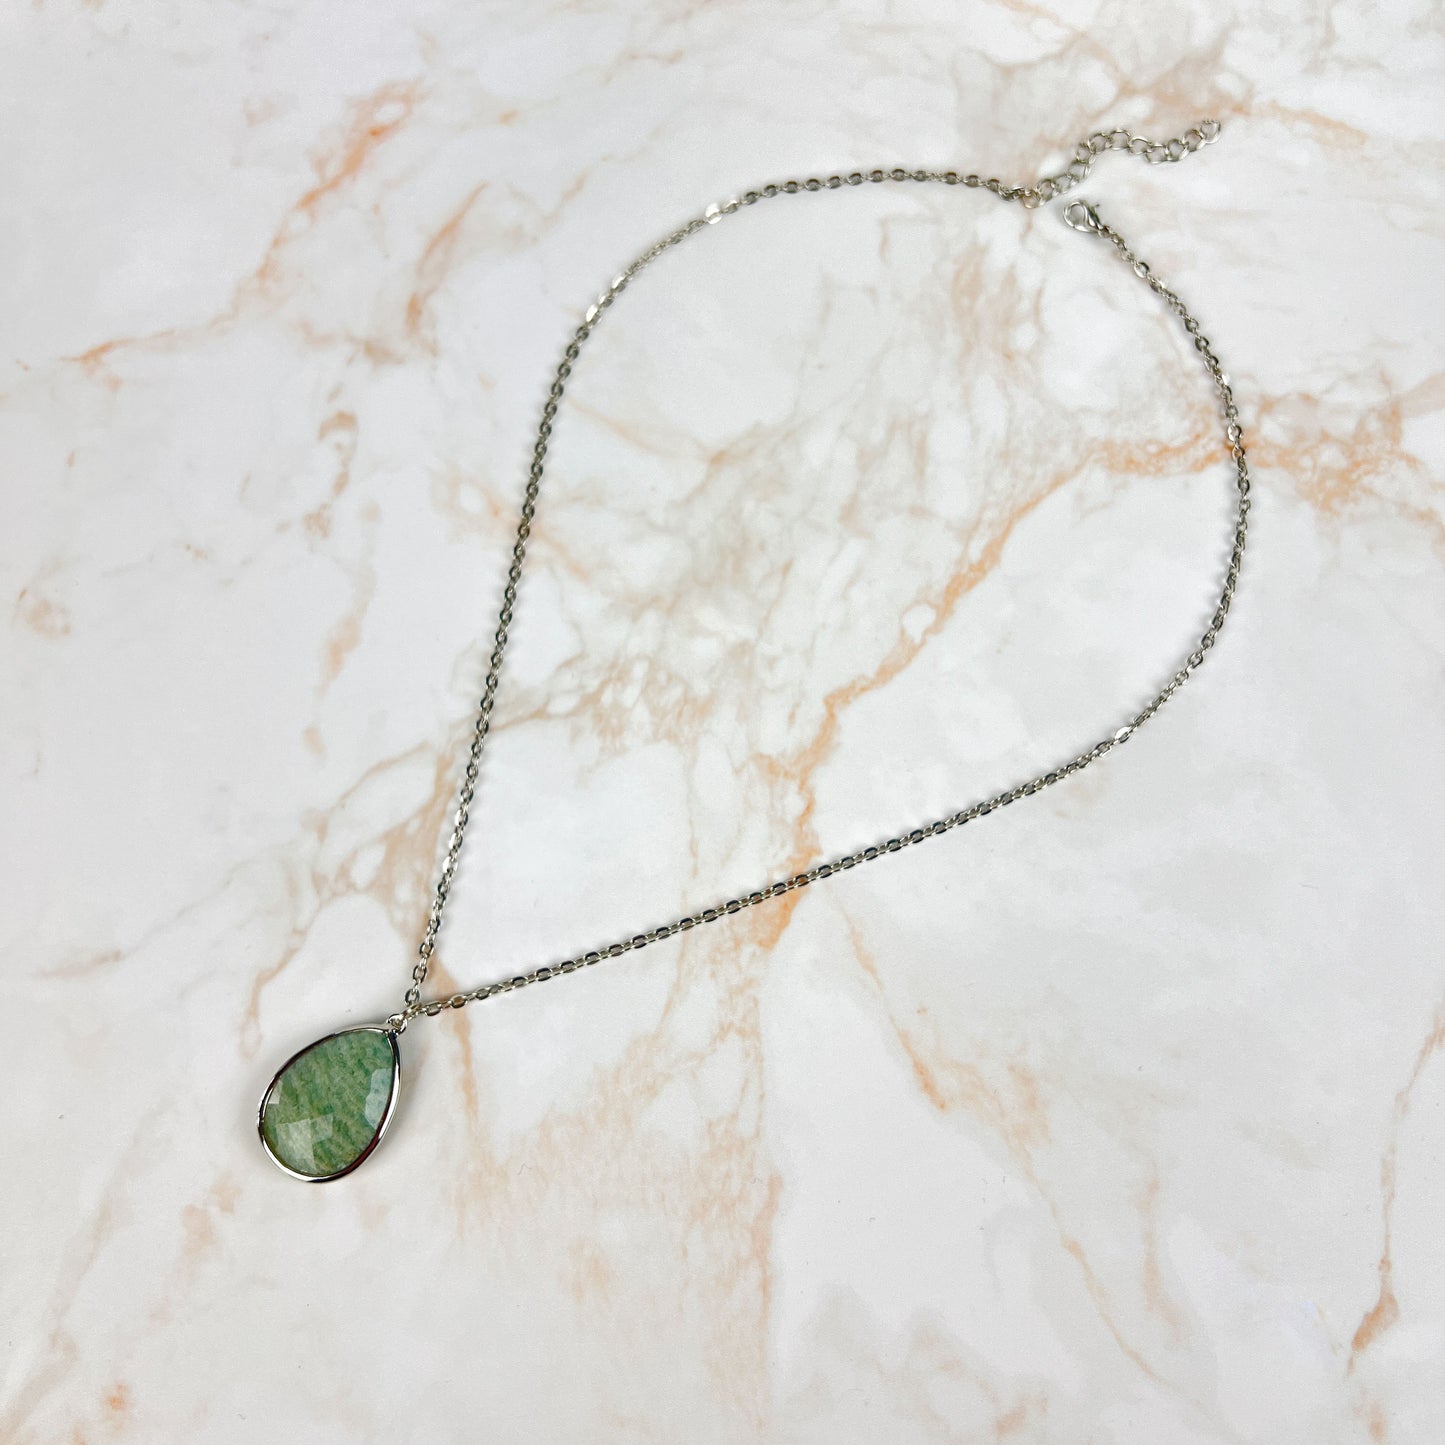 Faceted amazonite gemstone pendant necklace Baguette Magick